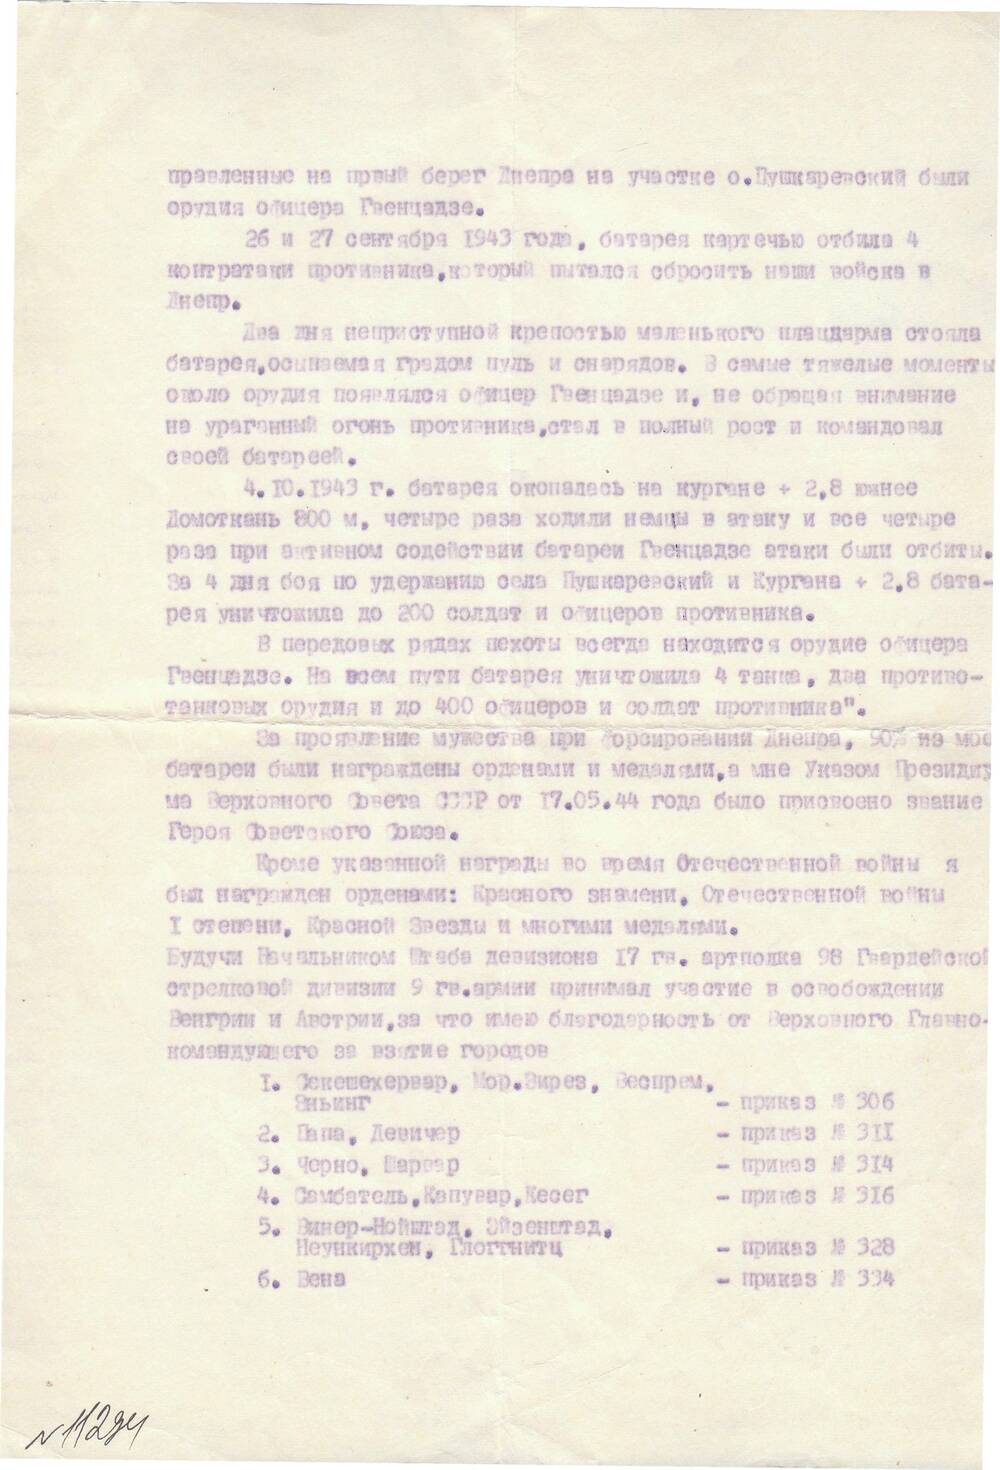 Автобиография Гвенцадзе Ивана Николаевича.
4 листа. (3 листа машинопись, 1 лист рукопись.)